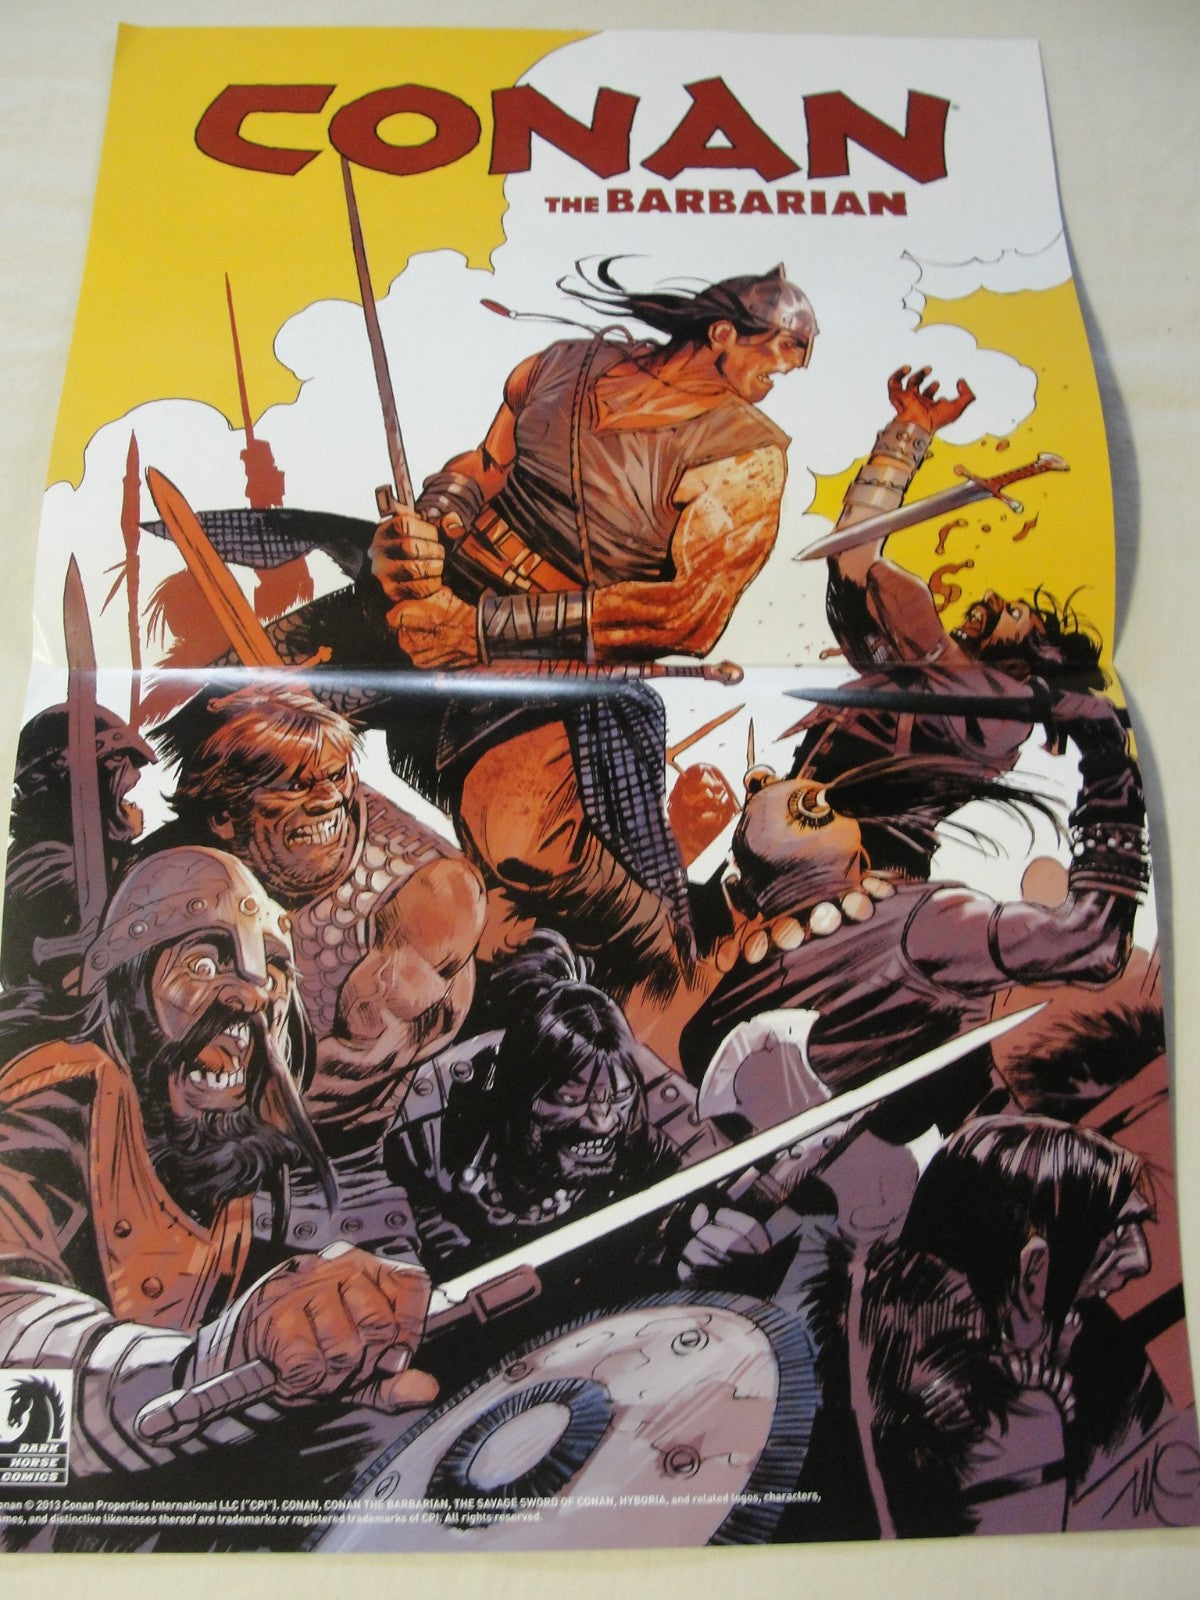 Conan the Barbarian & King Conan comic book double sided Dark Horse Comics poster